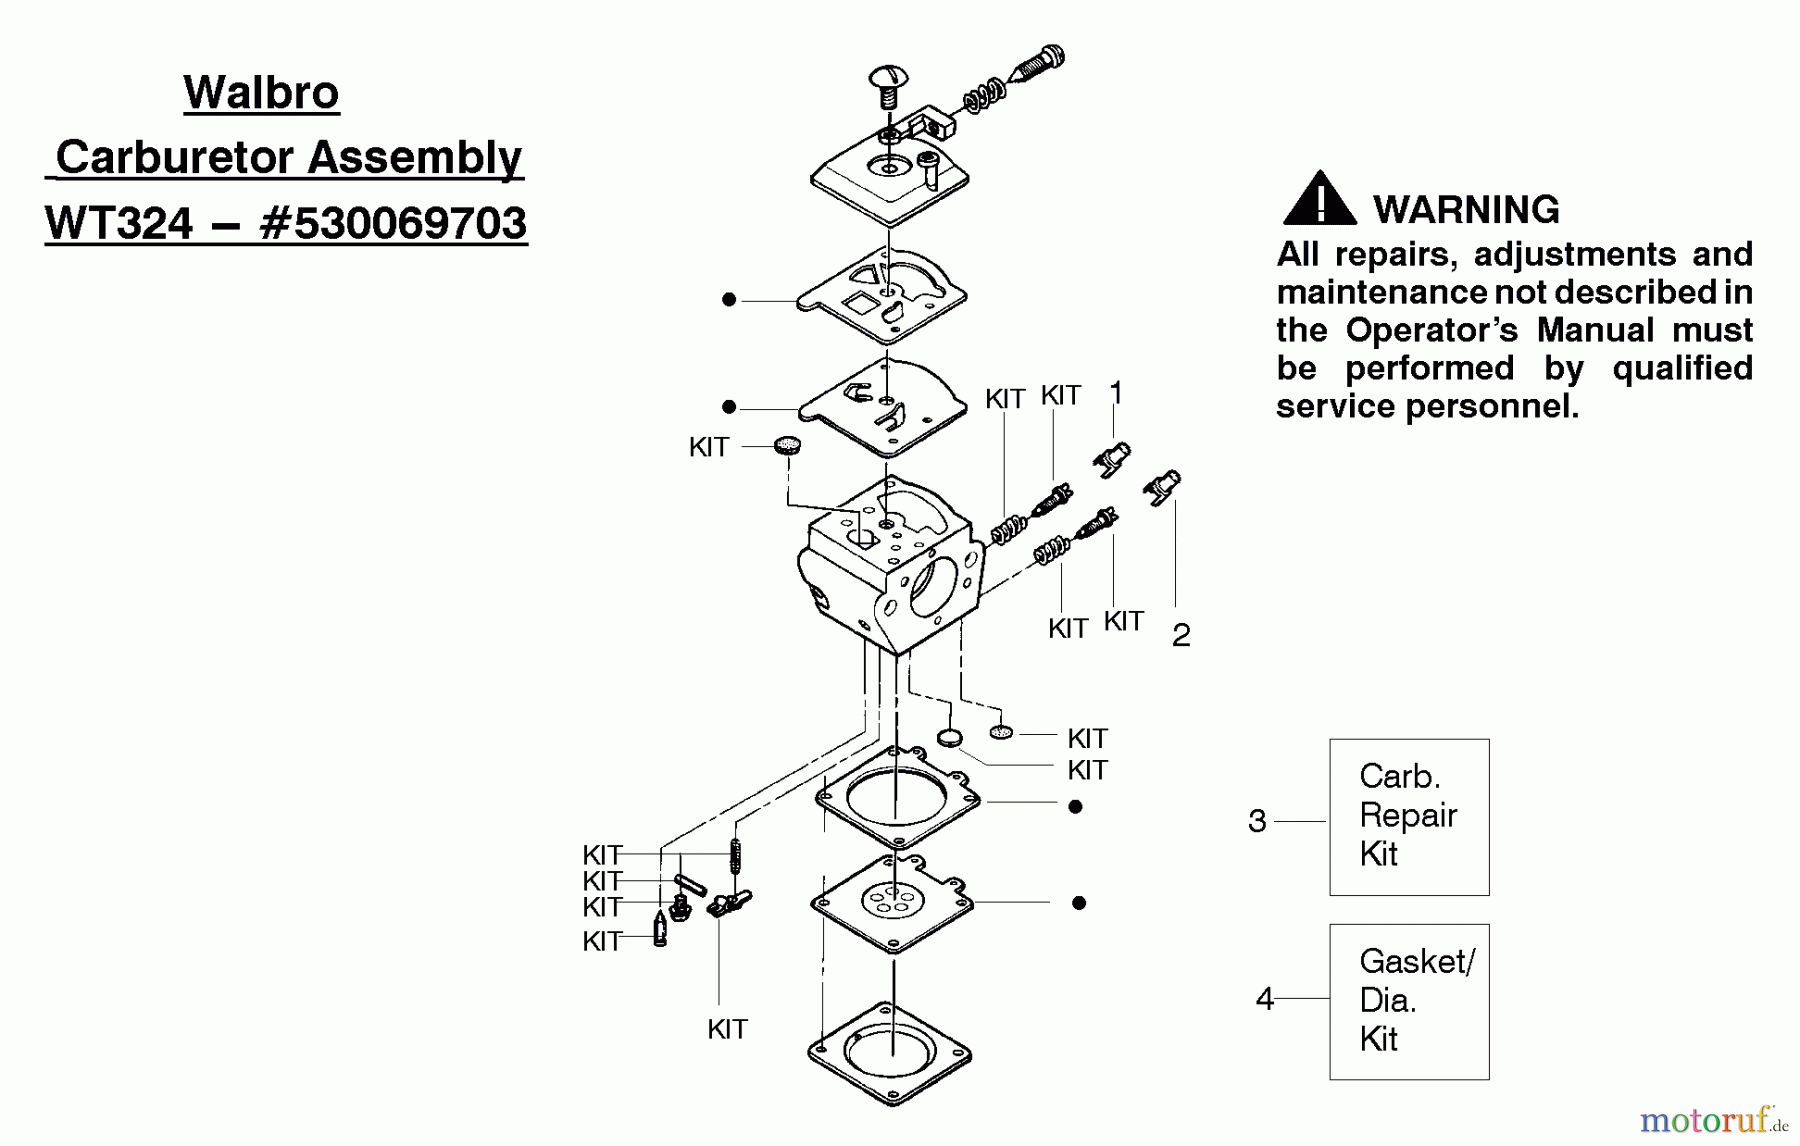  Poulan / Weed Eater Motorsägen 2150 (Type 5) - Poulan Predator Chainsaw Carburetor Assembly (Walbro WT324) 530069703